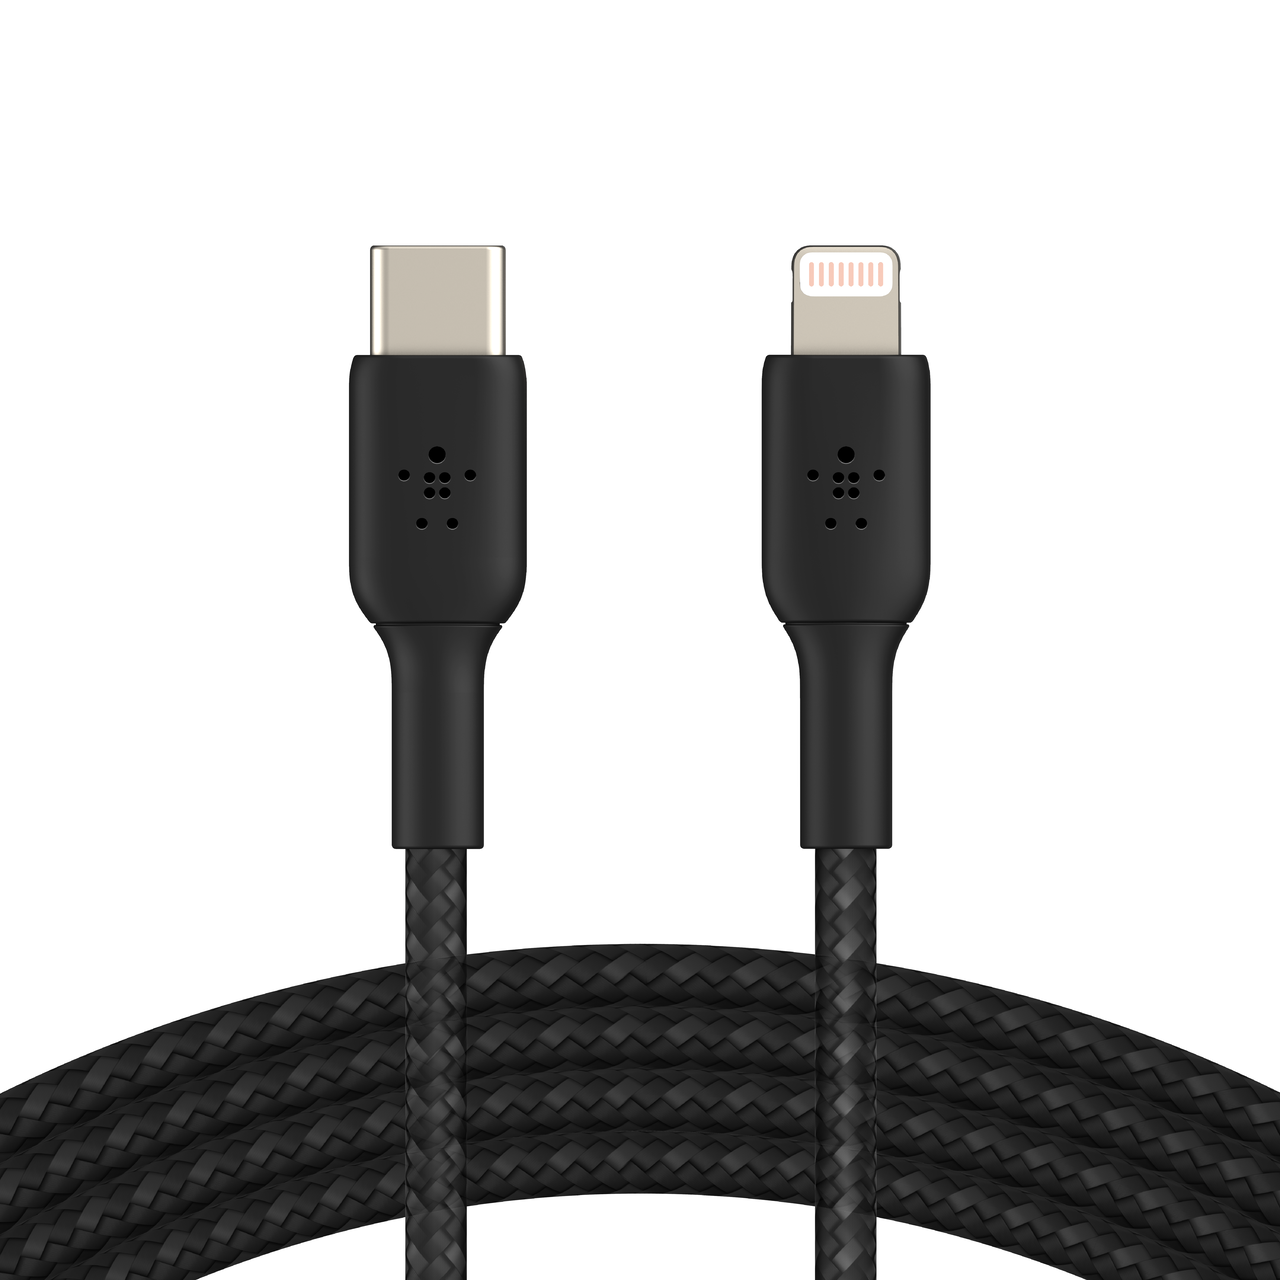 Thunderbolt 4 (USB-C) Pro Cable (1 m) - Apple